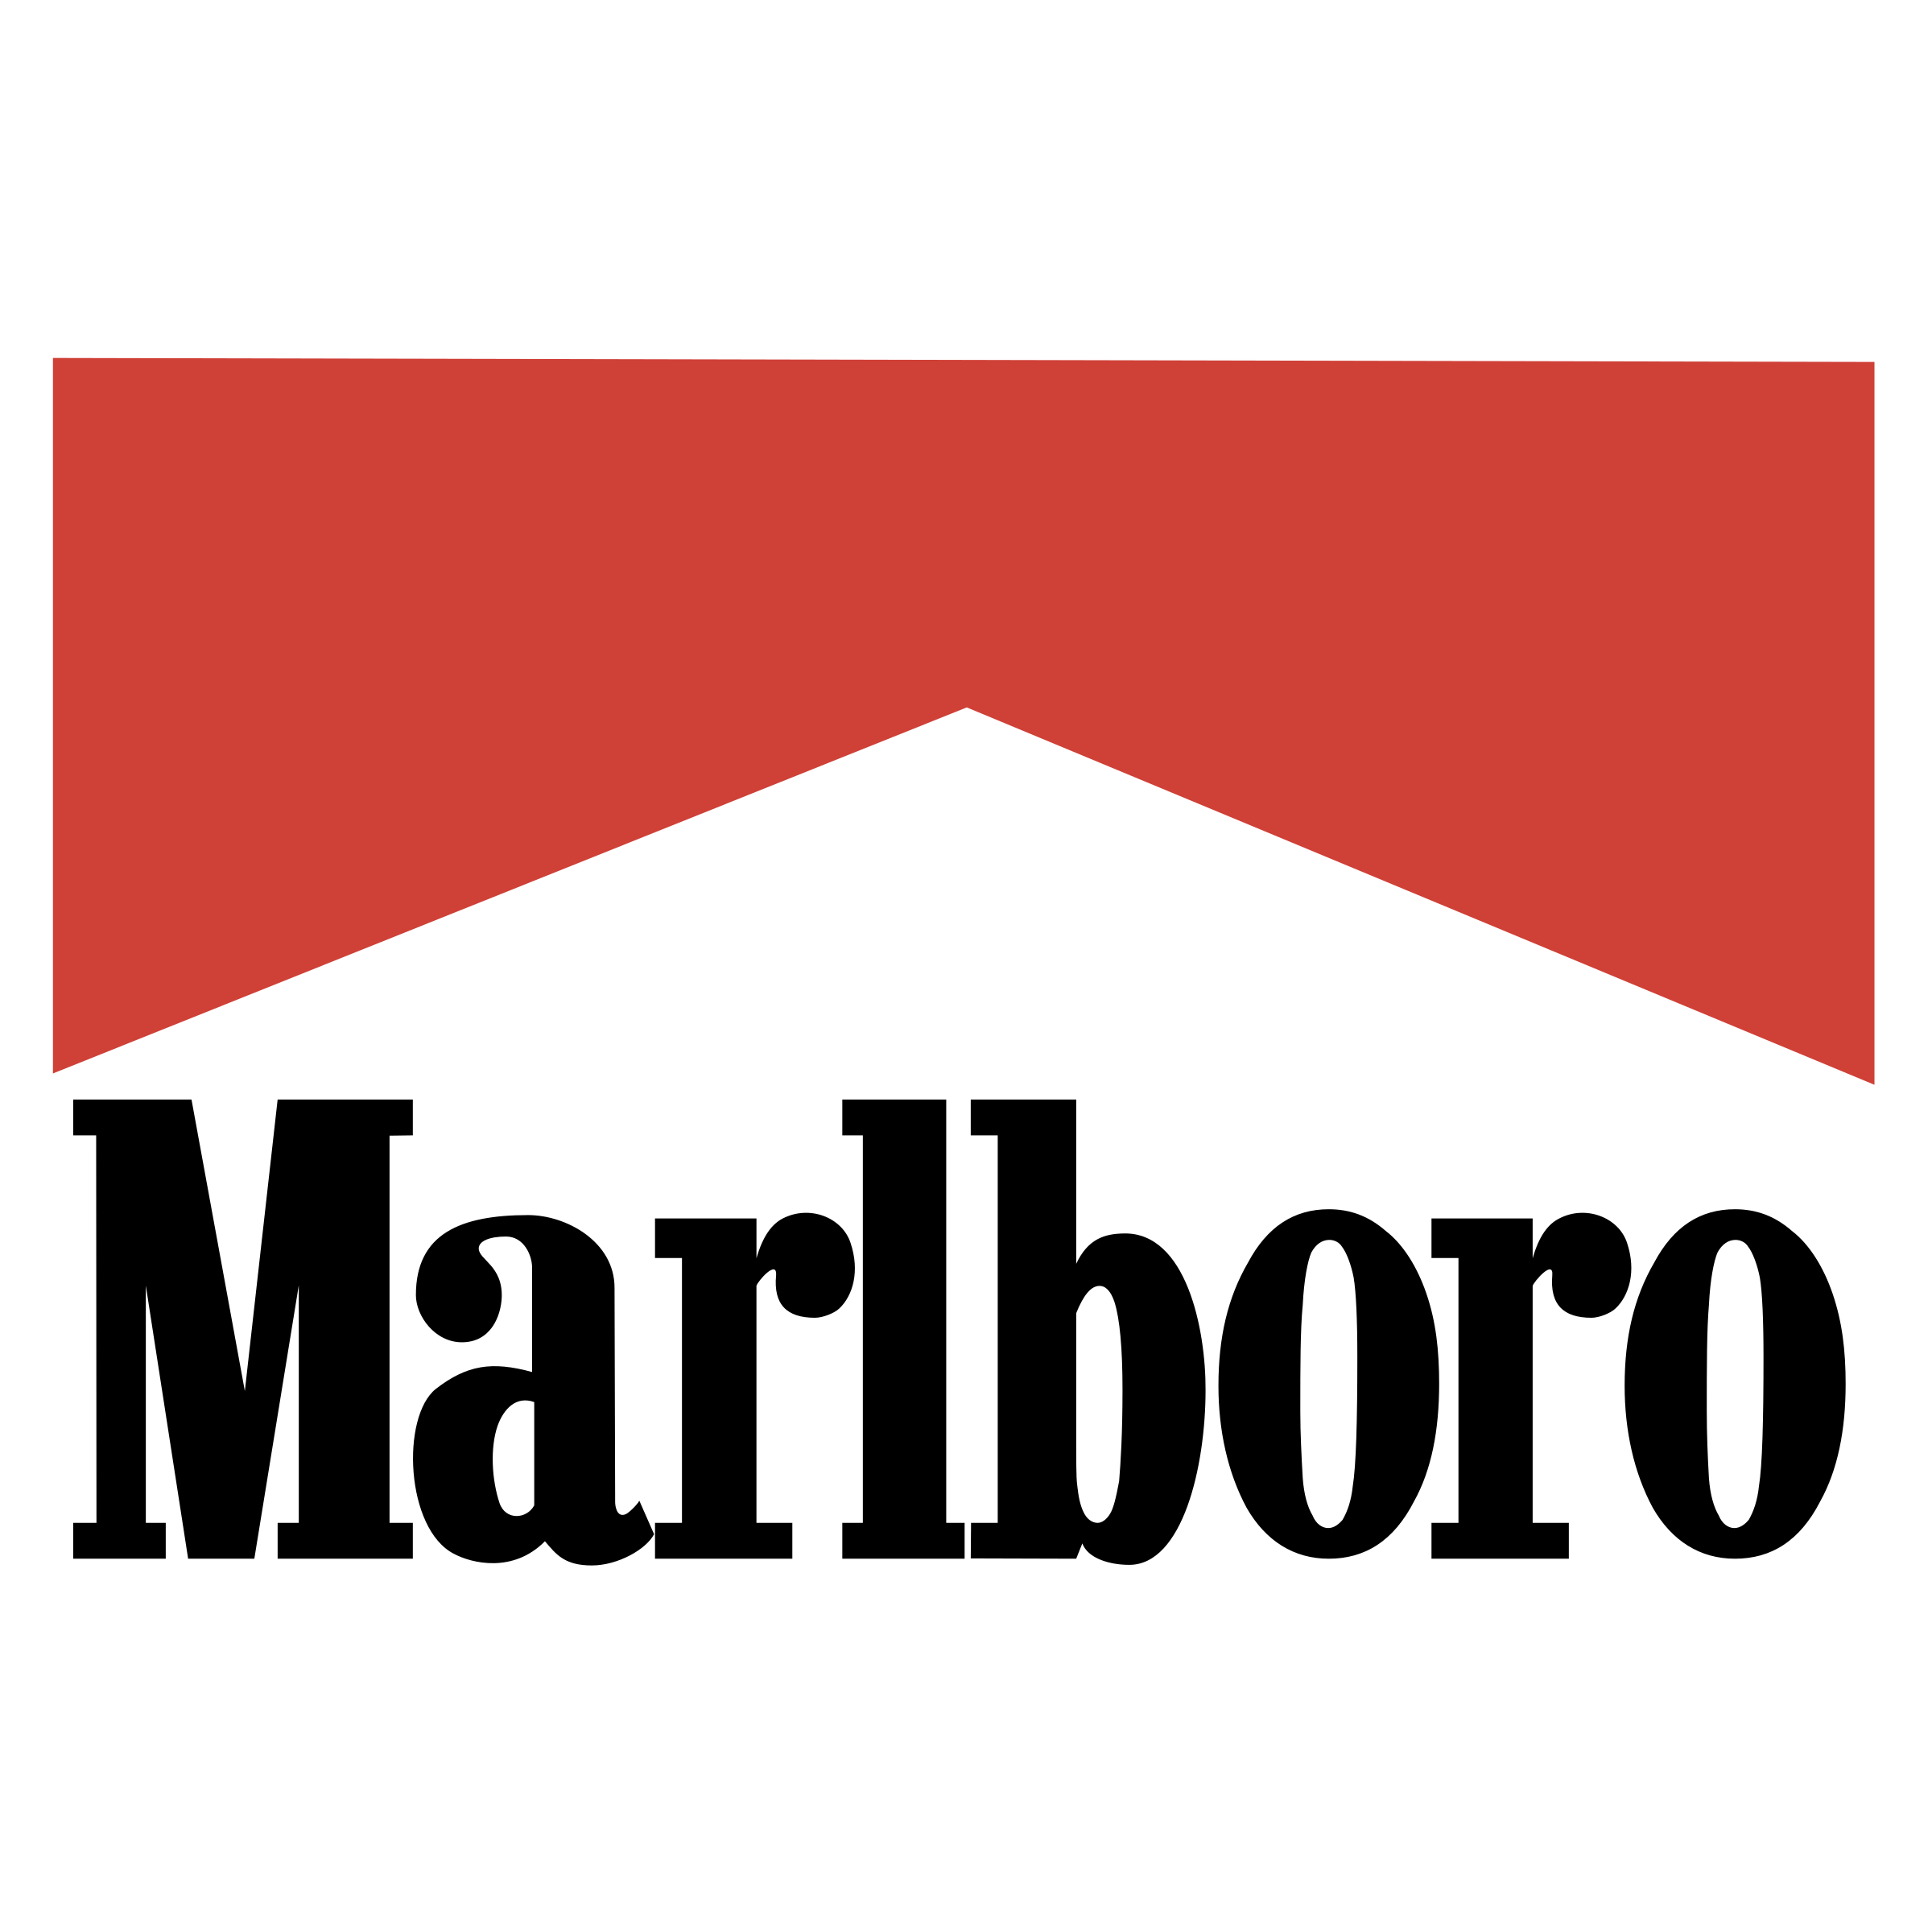 Marlboro Logo - Marlboro Logo PNG Transparent & SVG Vector - Freebie Supply